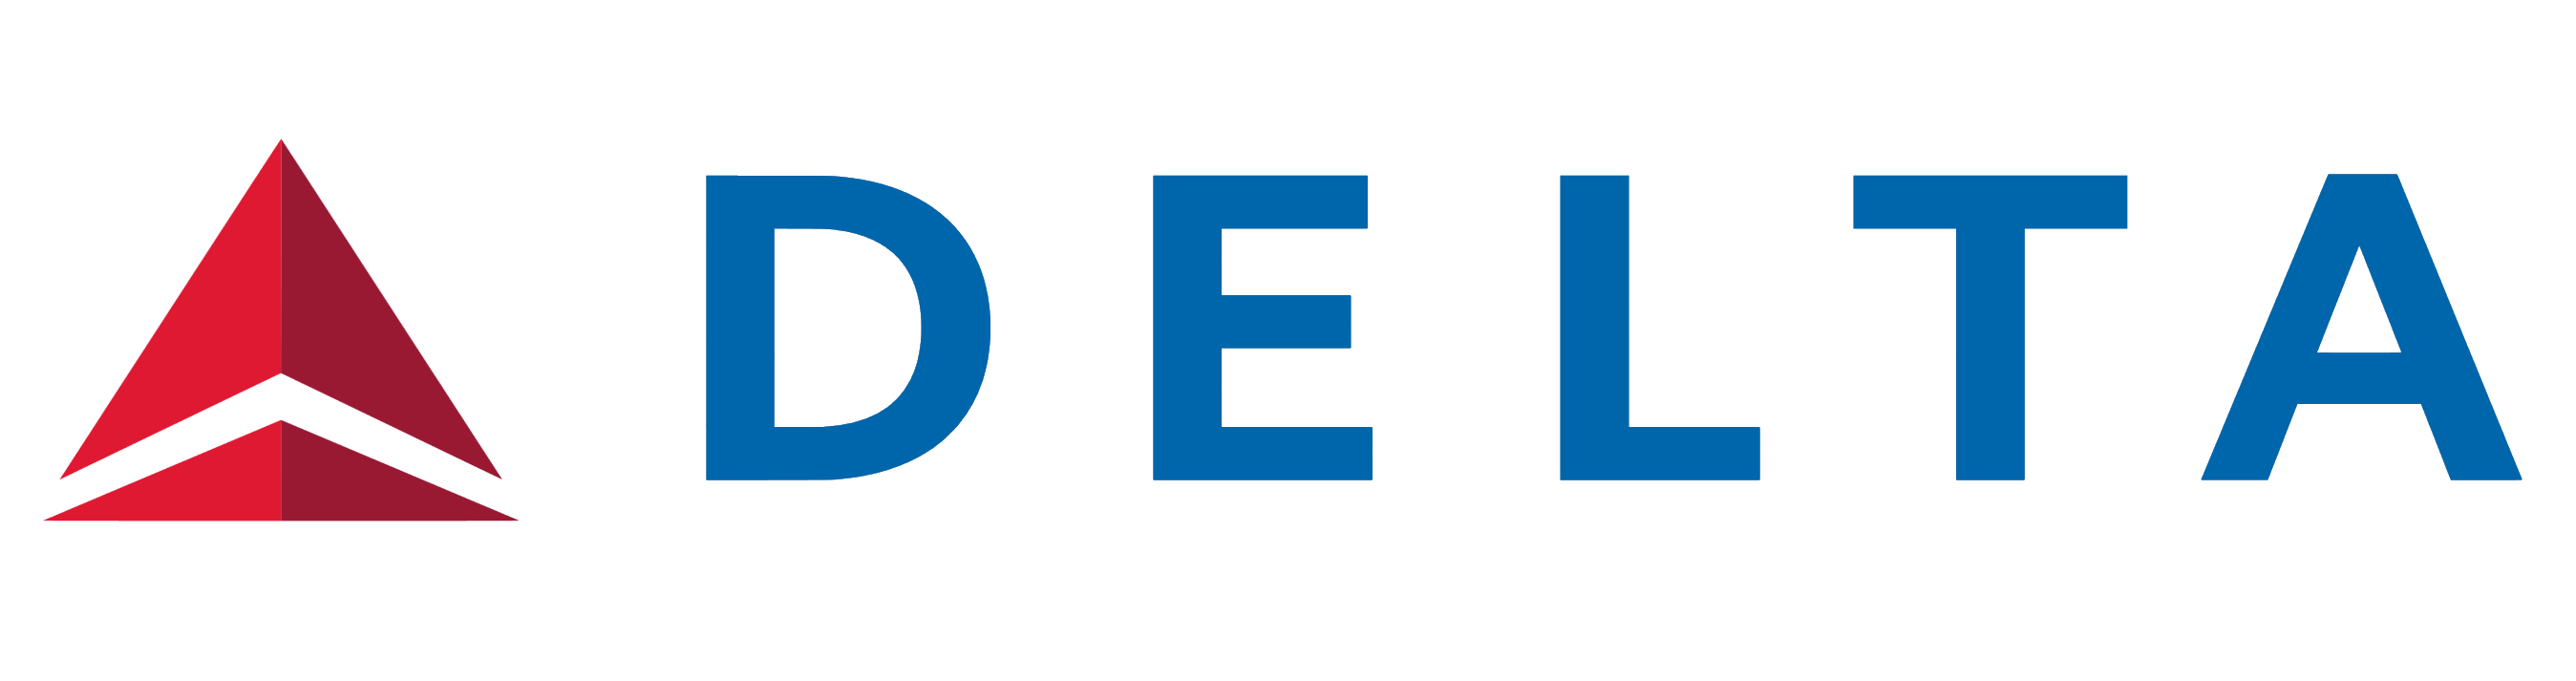 Delta Air Lines logo, logotype